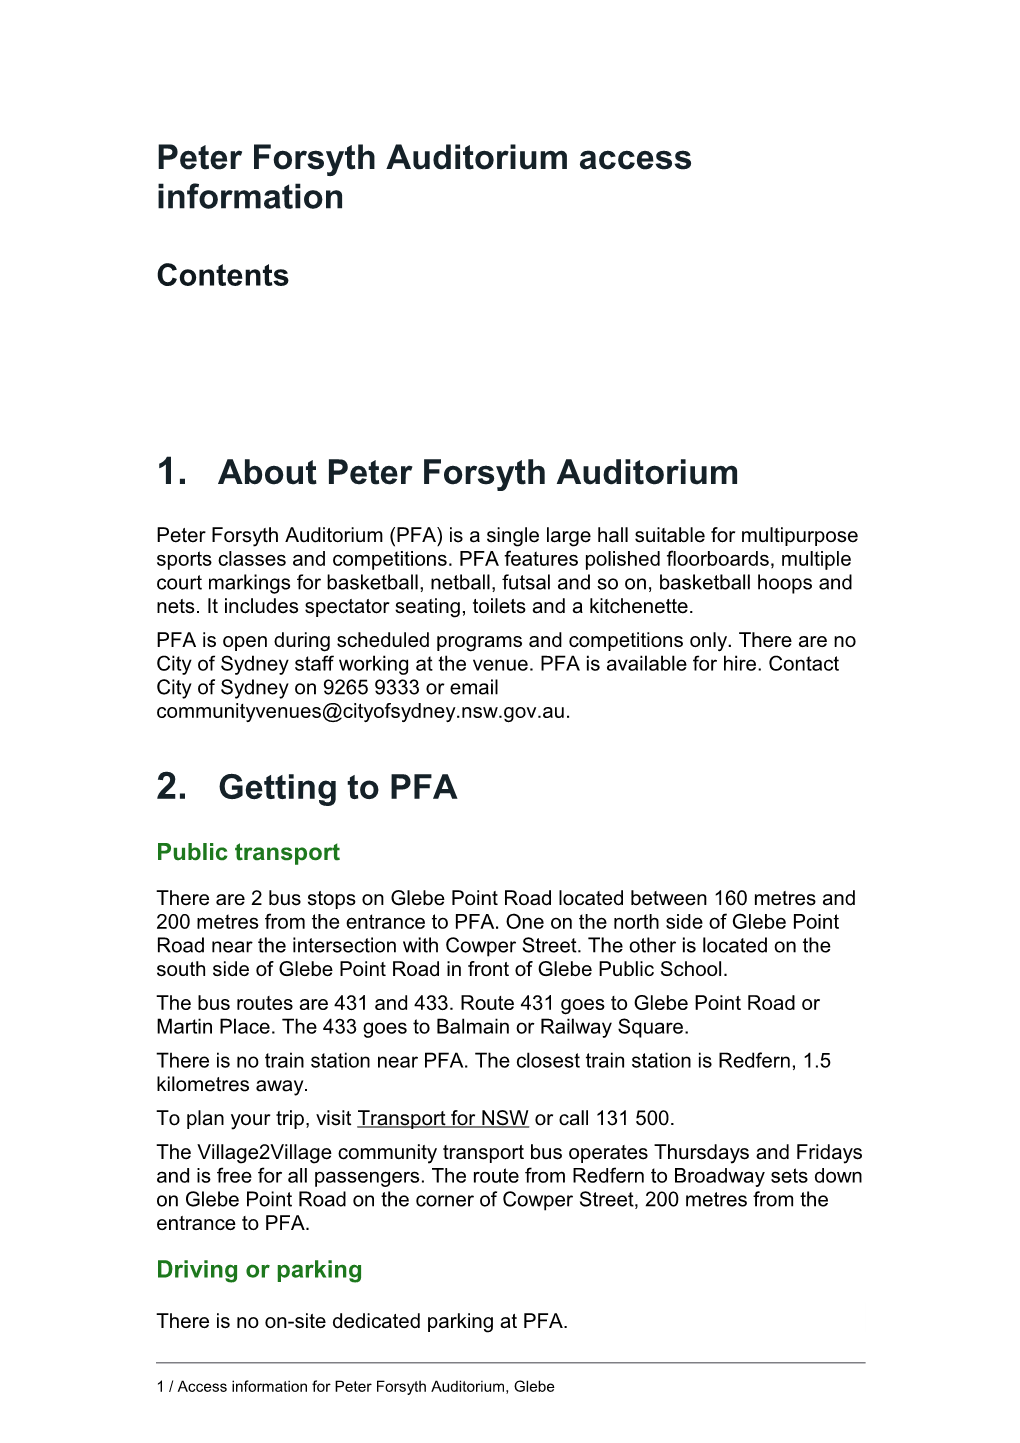 Peter Forsyth Auditorium Access Information